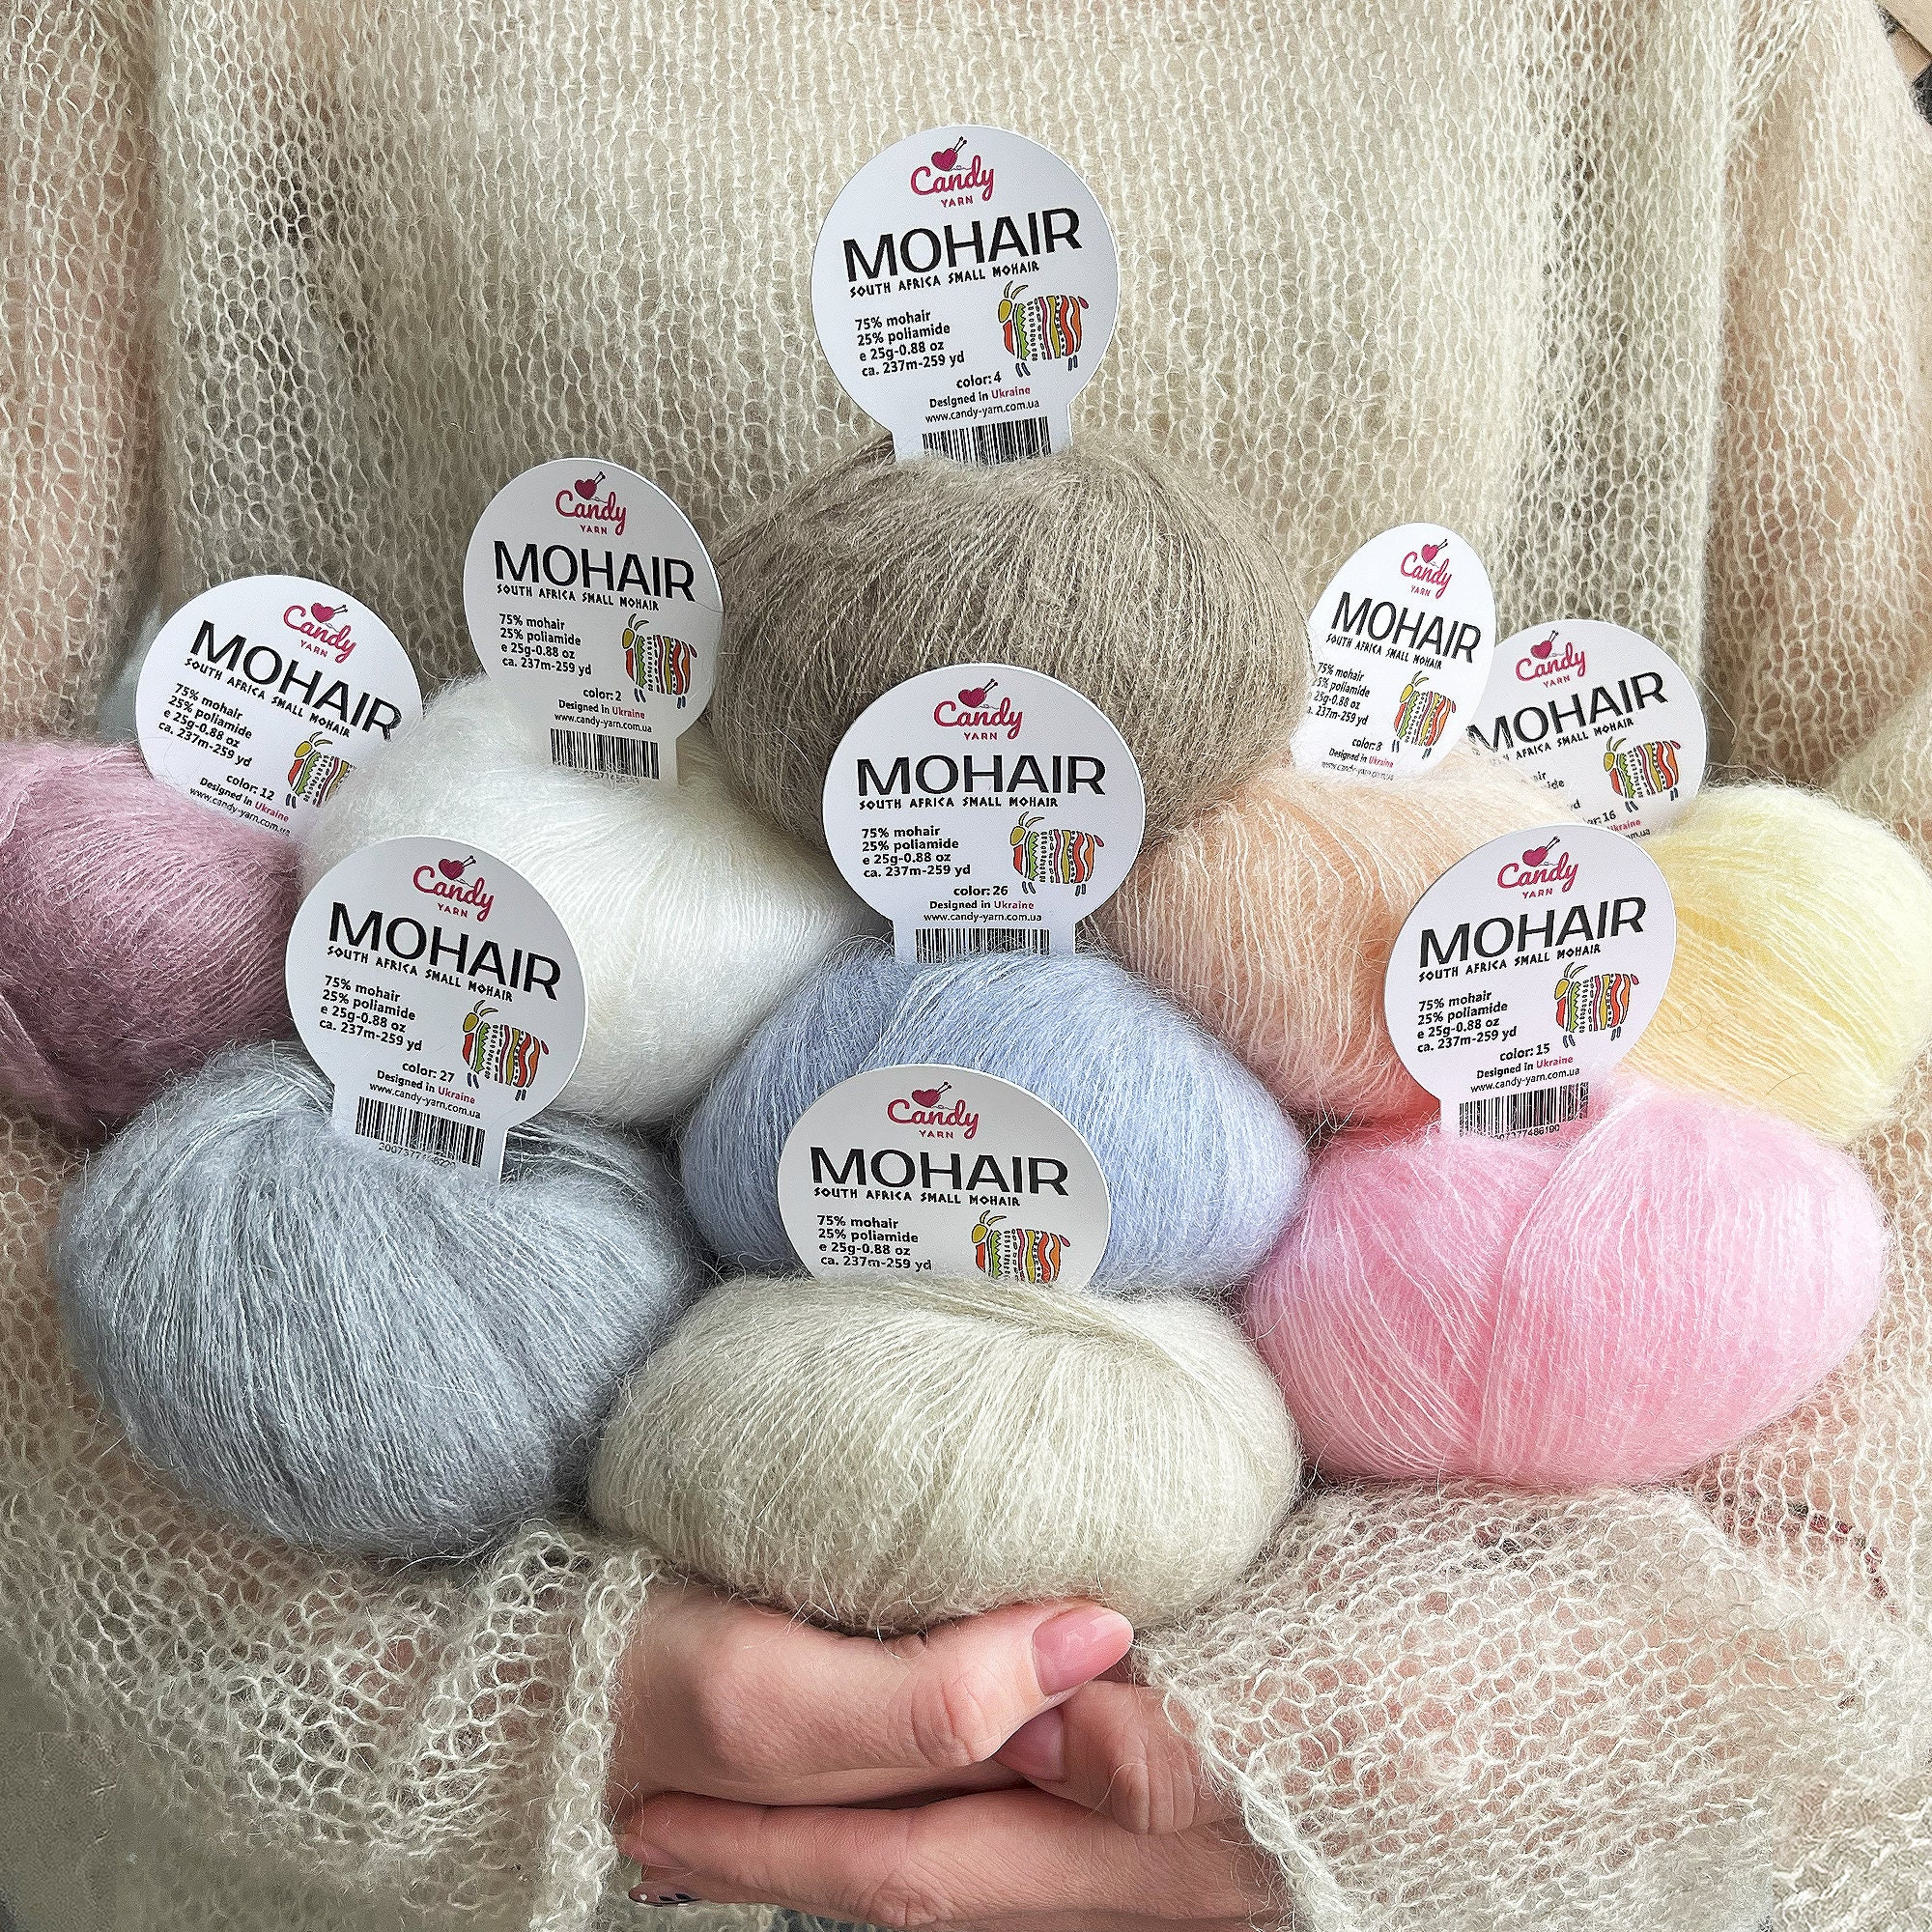 25 Grams South African Small MOHAIR YARN, Lace Yarn, Yarn for Knitting,  Soft Mohair Yarn, Yarn for Crocheting, Warm Yarn, Ukrainian Yarn 